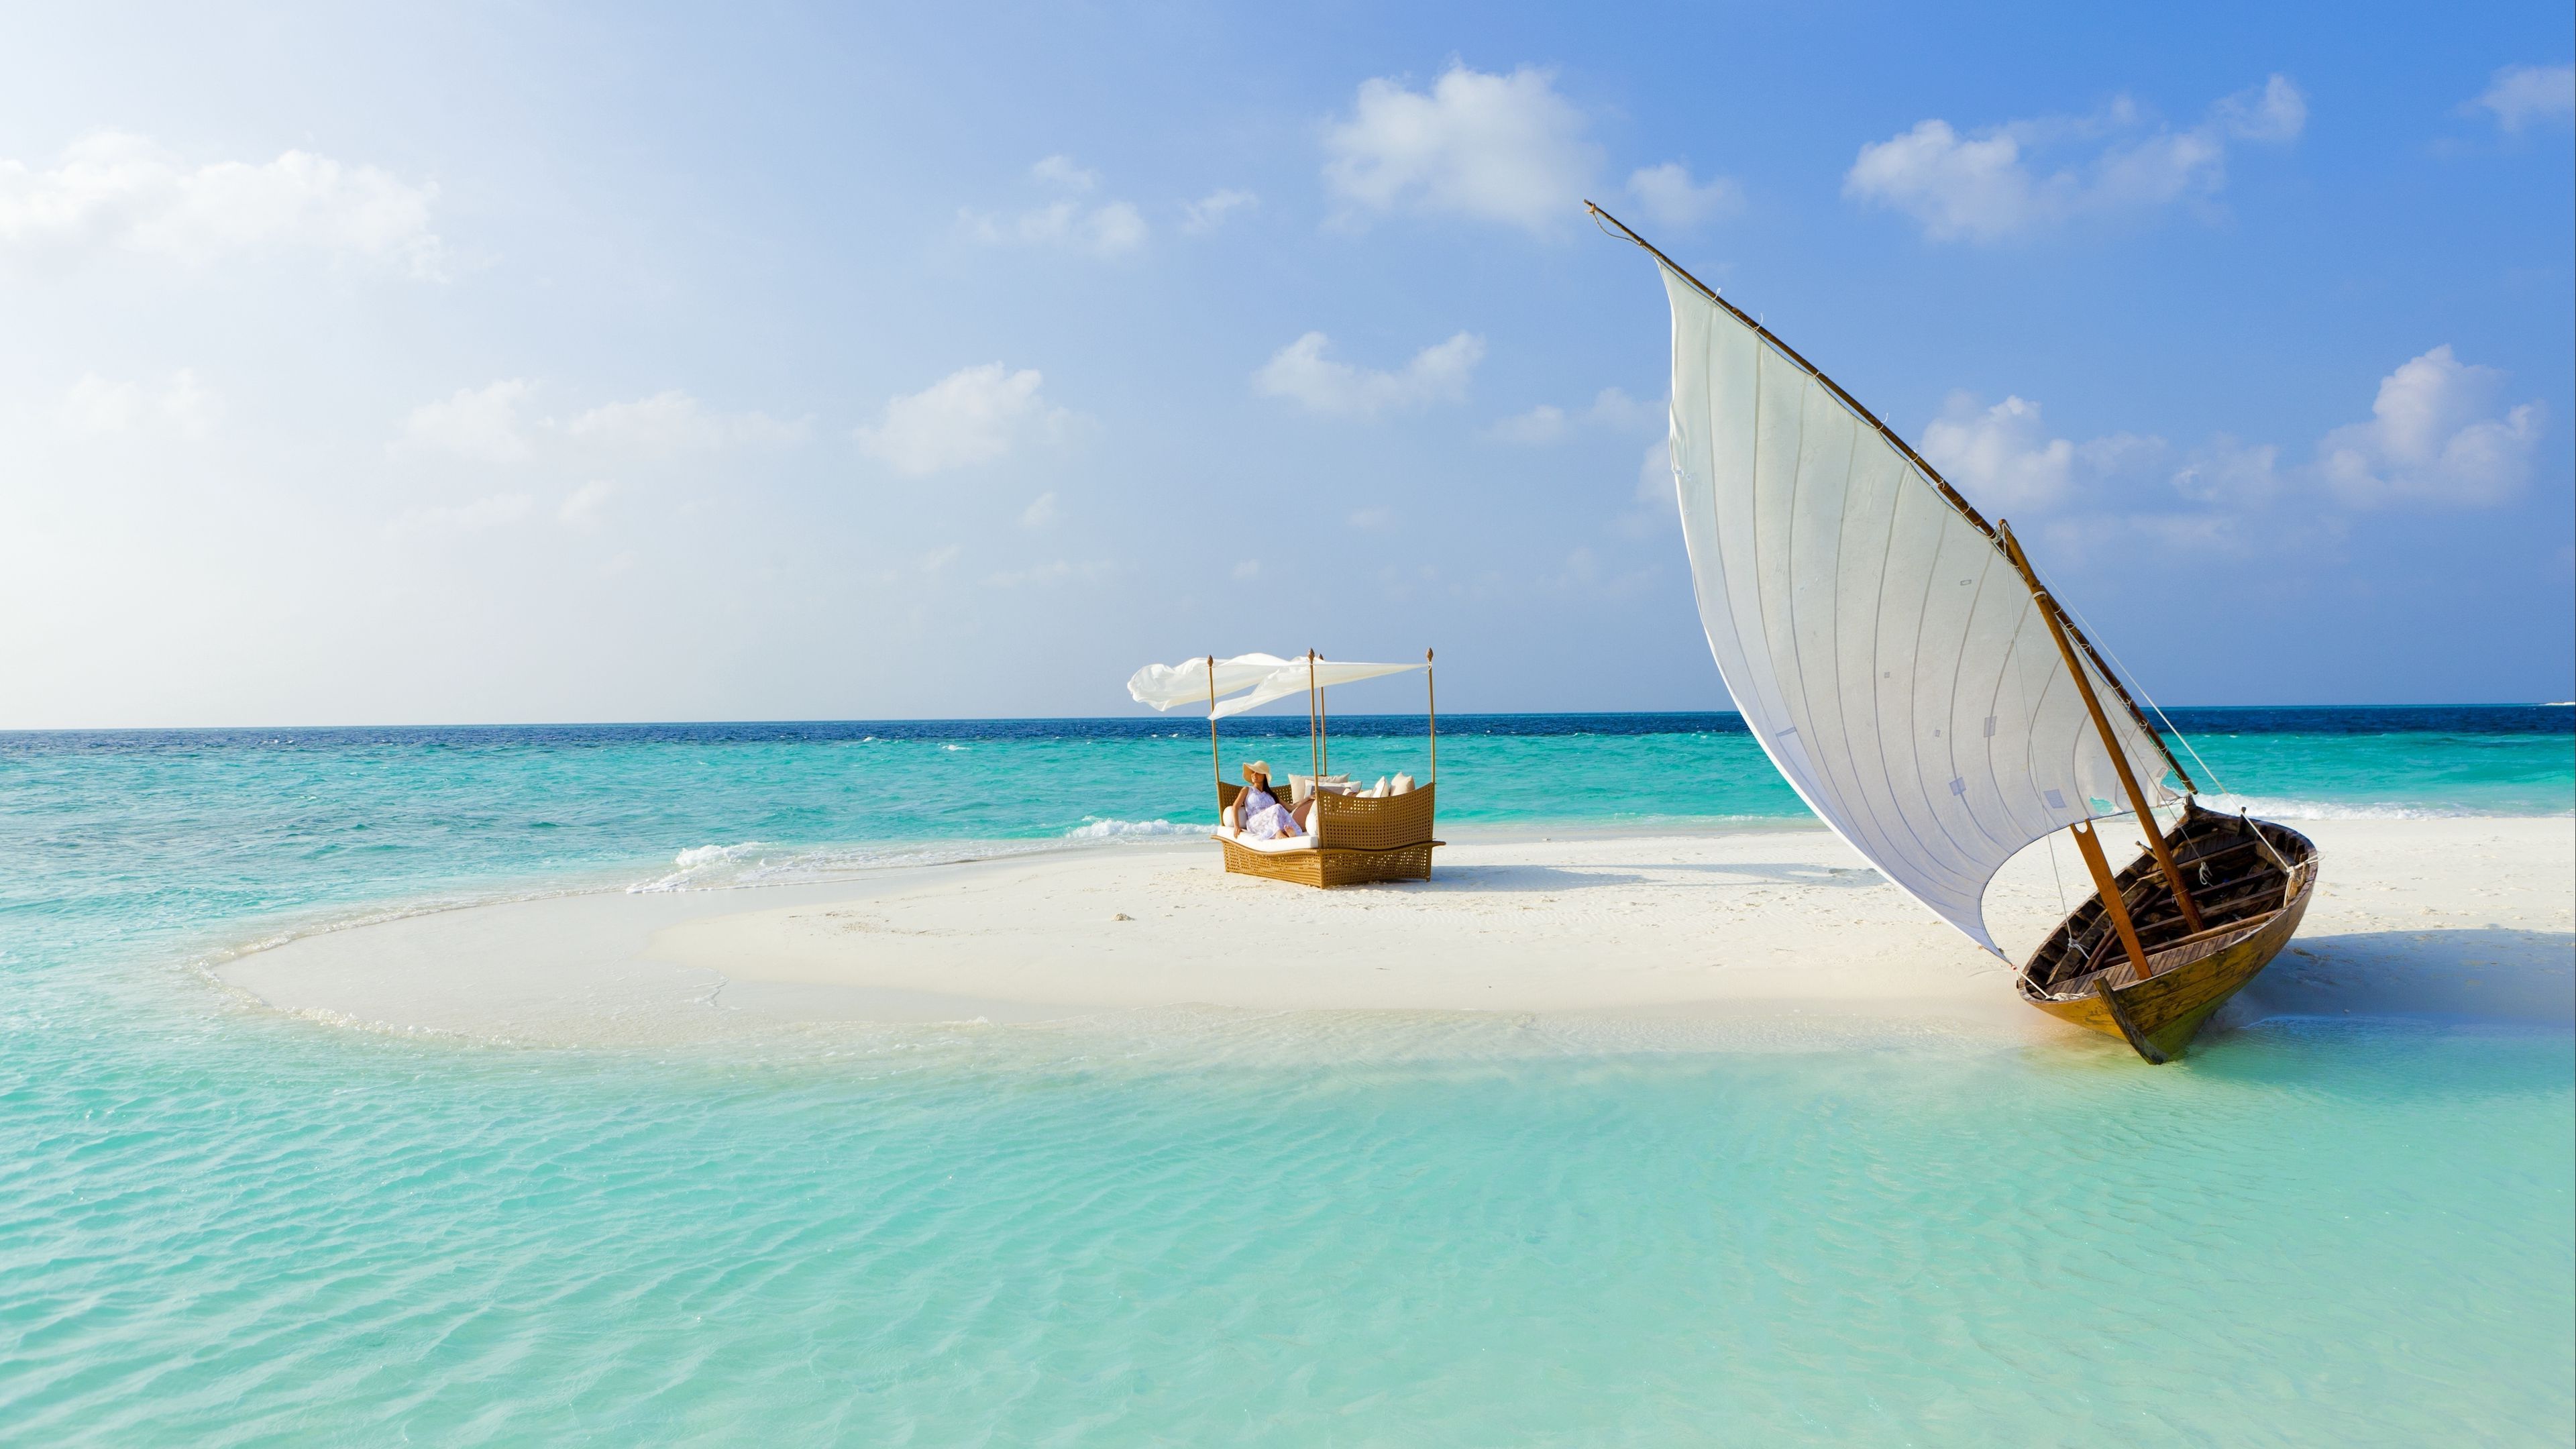 Download wallpaper 3840x2160 maldives, beach, tropical, sea, sand, island, boat, summer 4k uhd 16:9 HD background